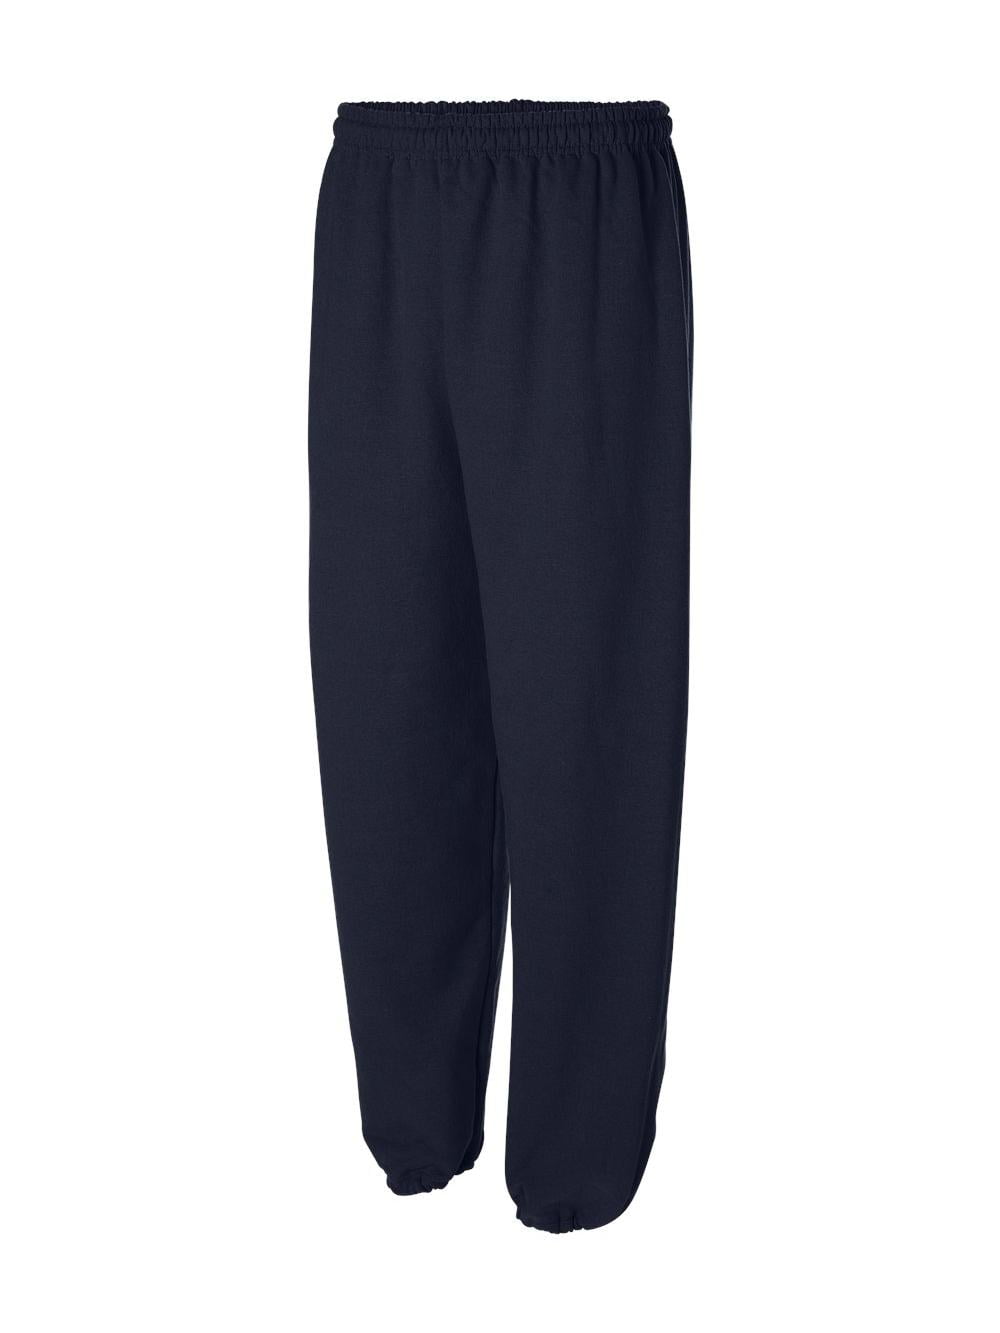 Gildan - Heavy Blend Sweatpants - 18200 - Black - Size: L